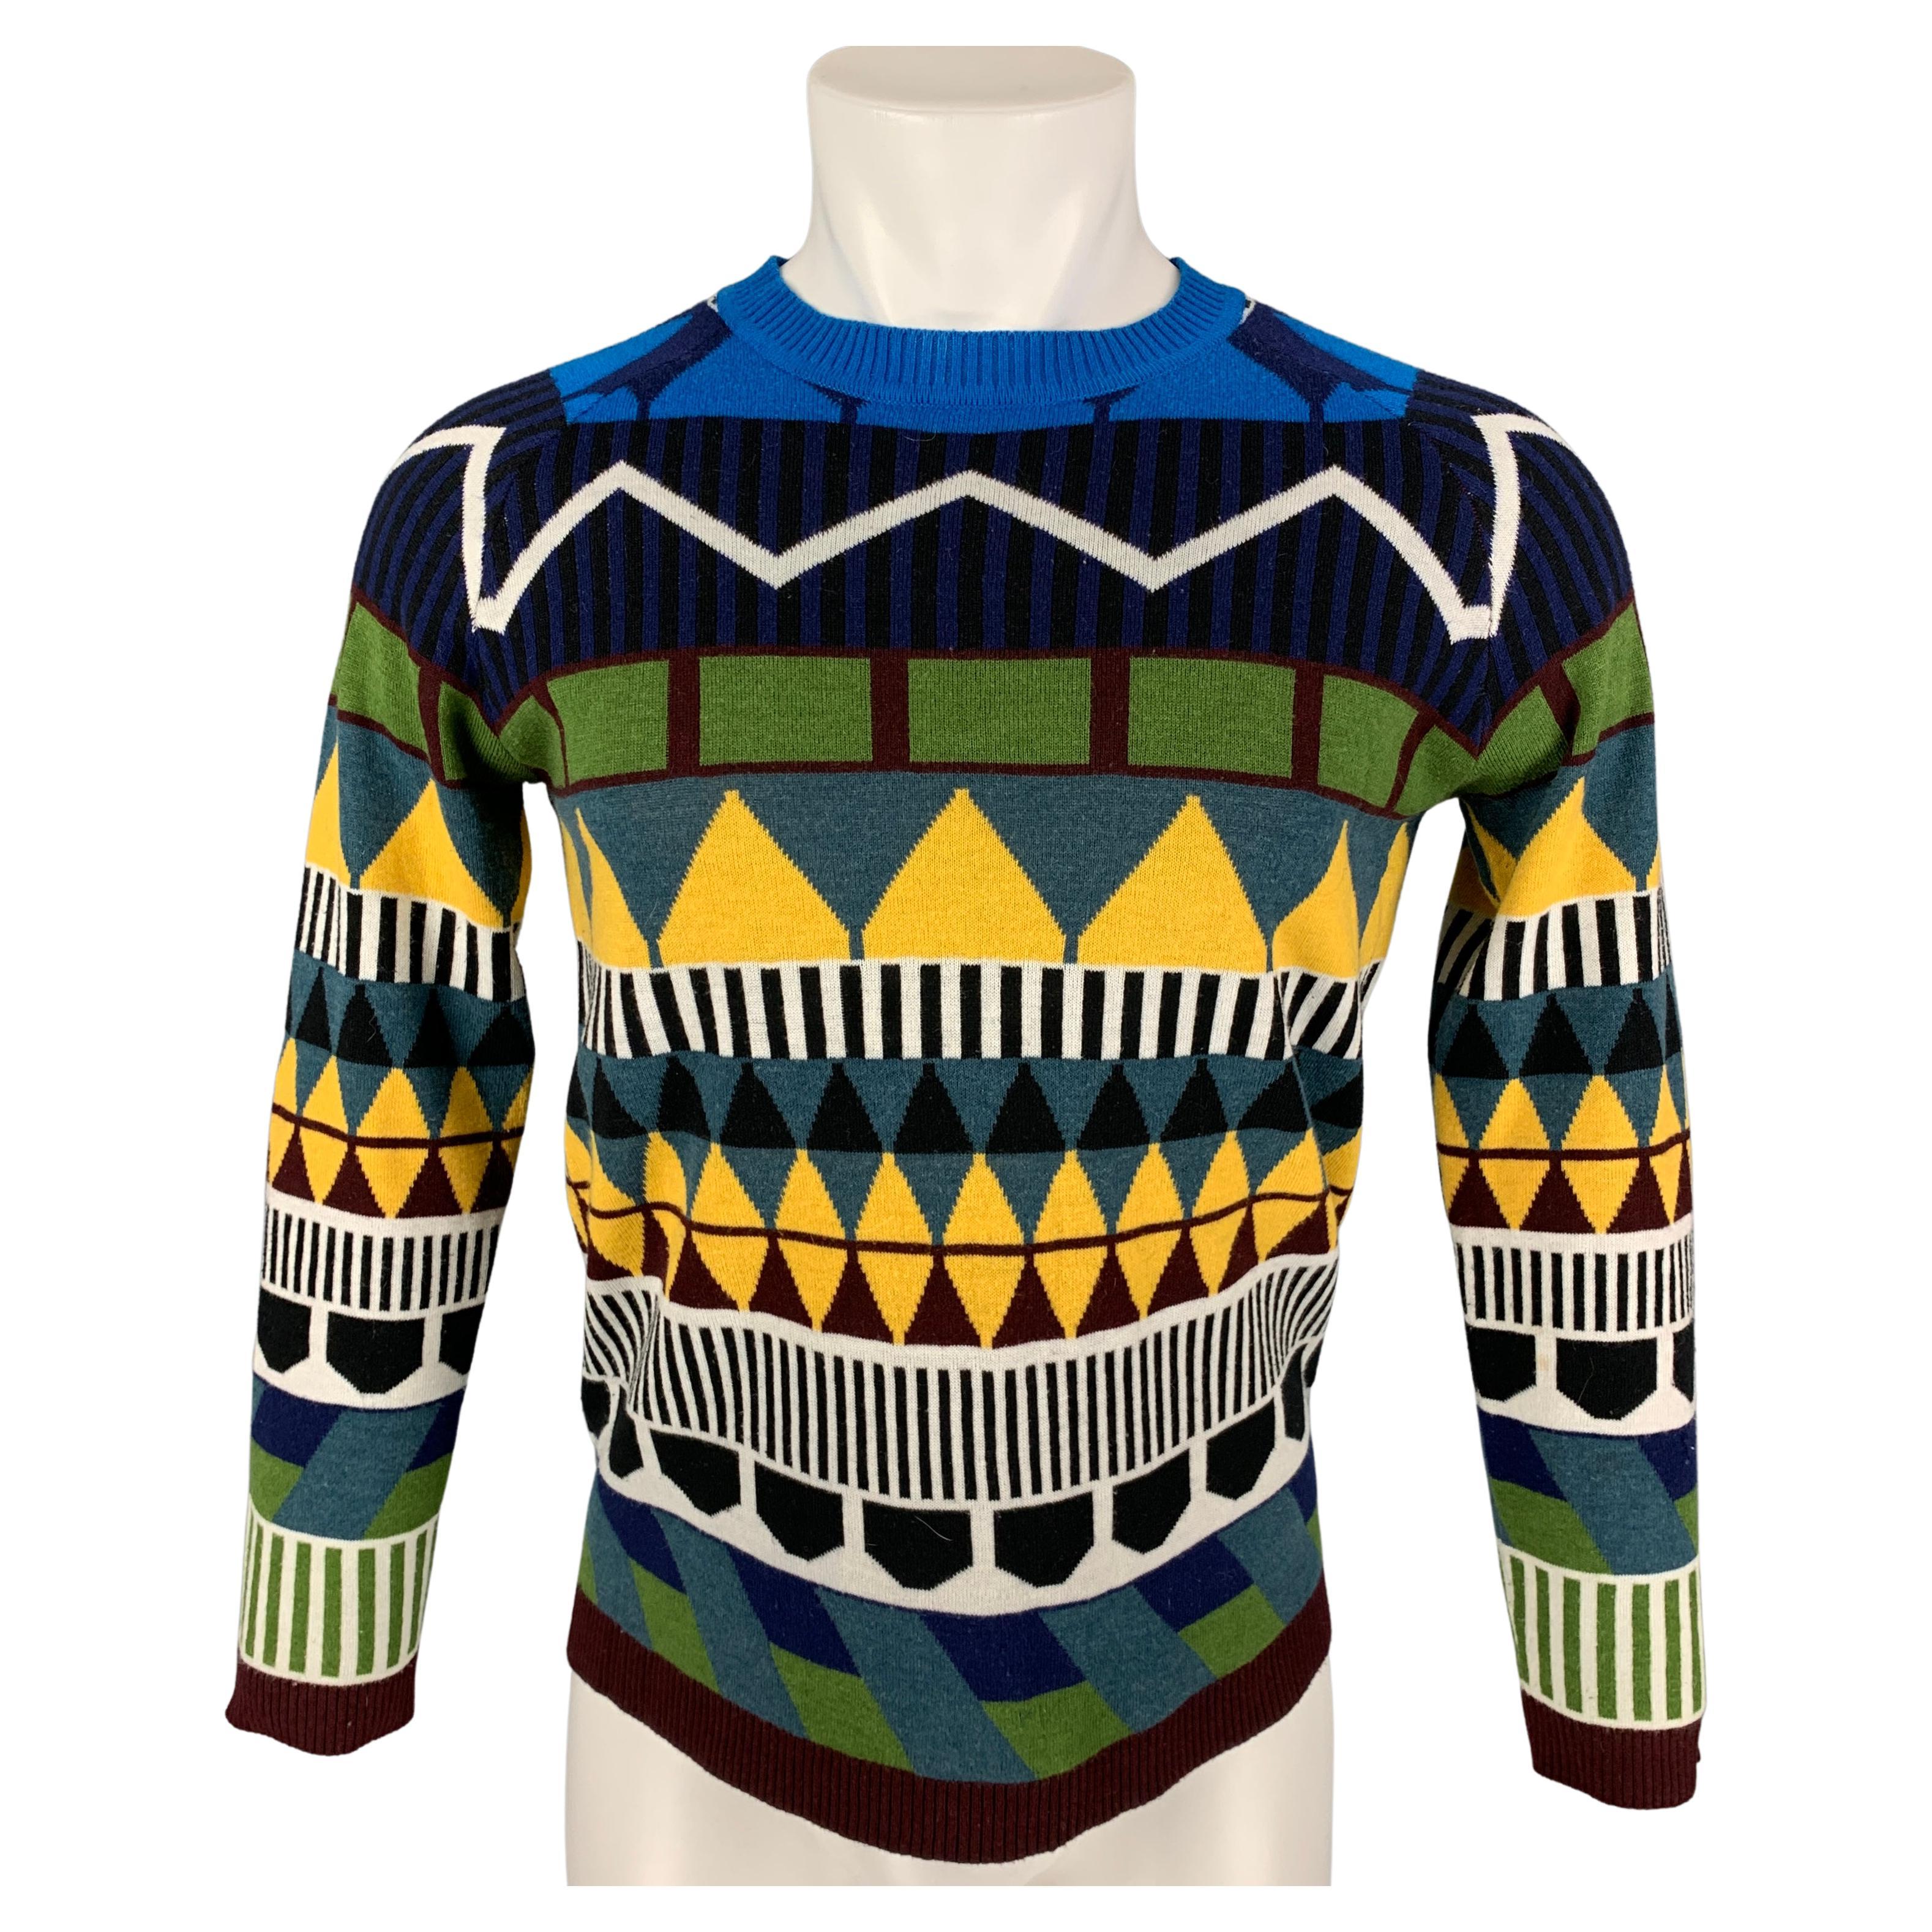 BURBERRY PRORSUM Spring 2012 Size M Multi-Color Wool / Cashmere Sweater